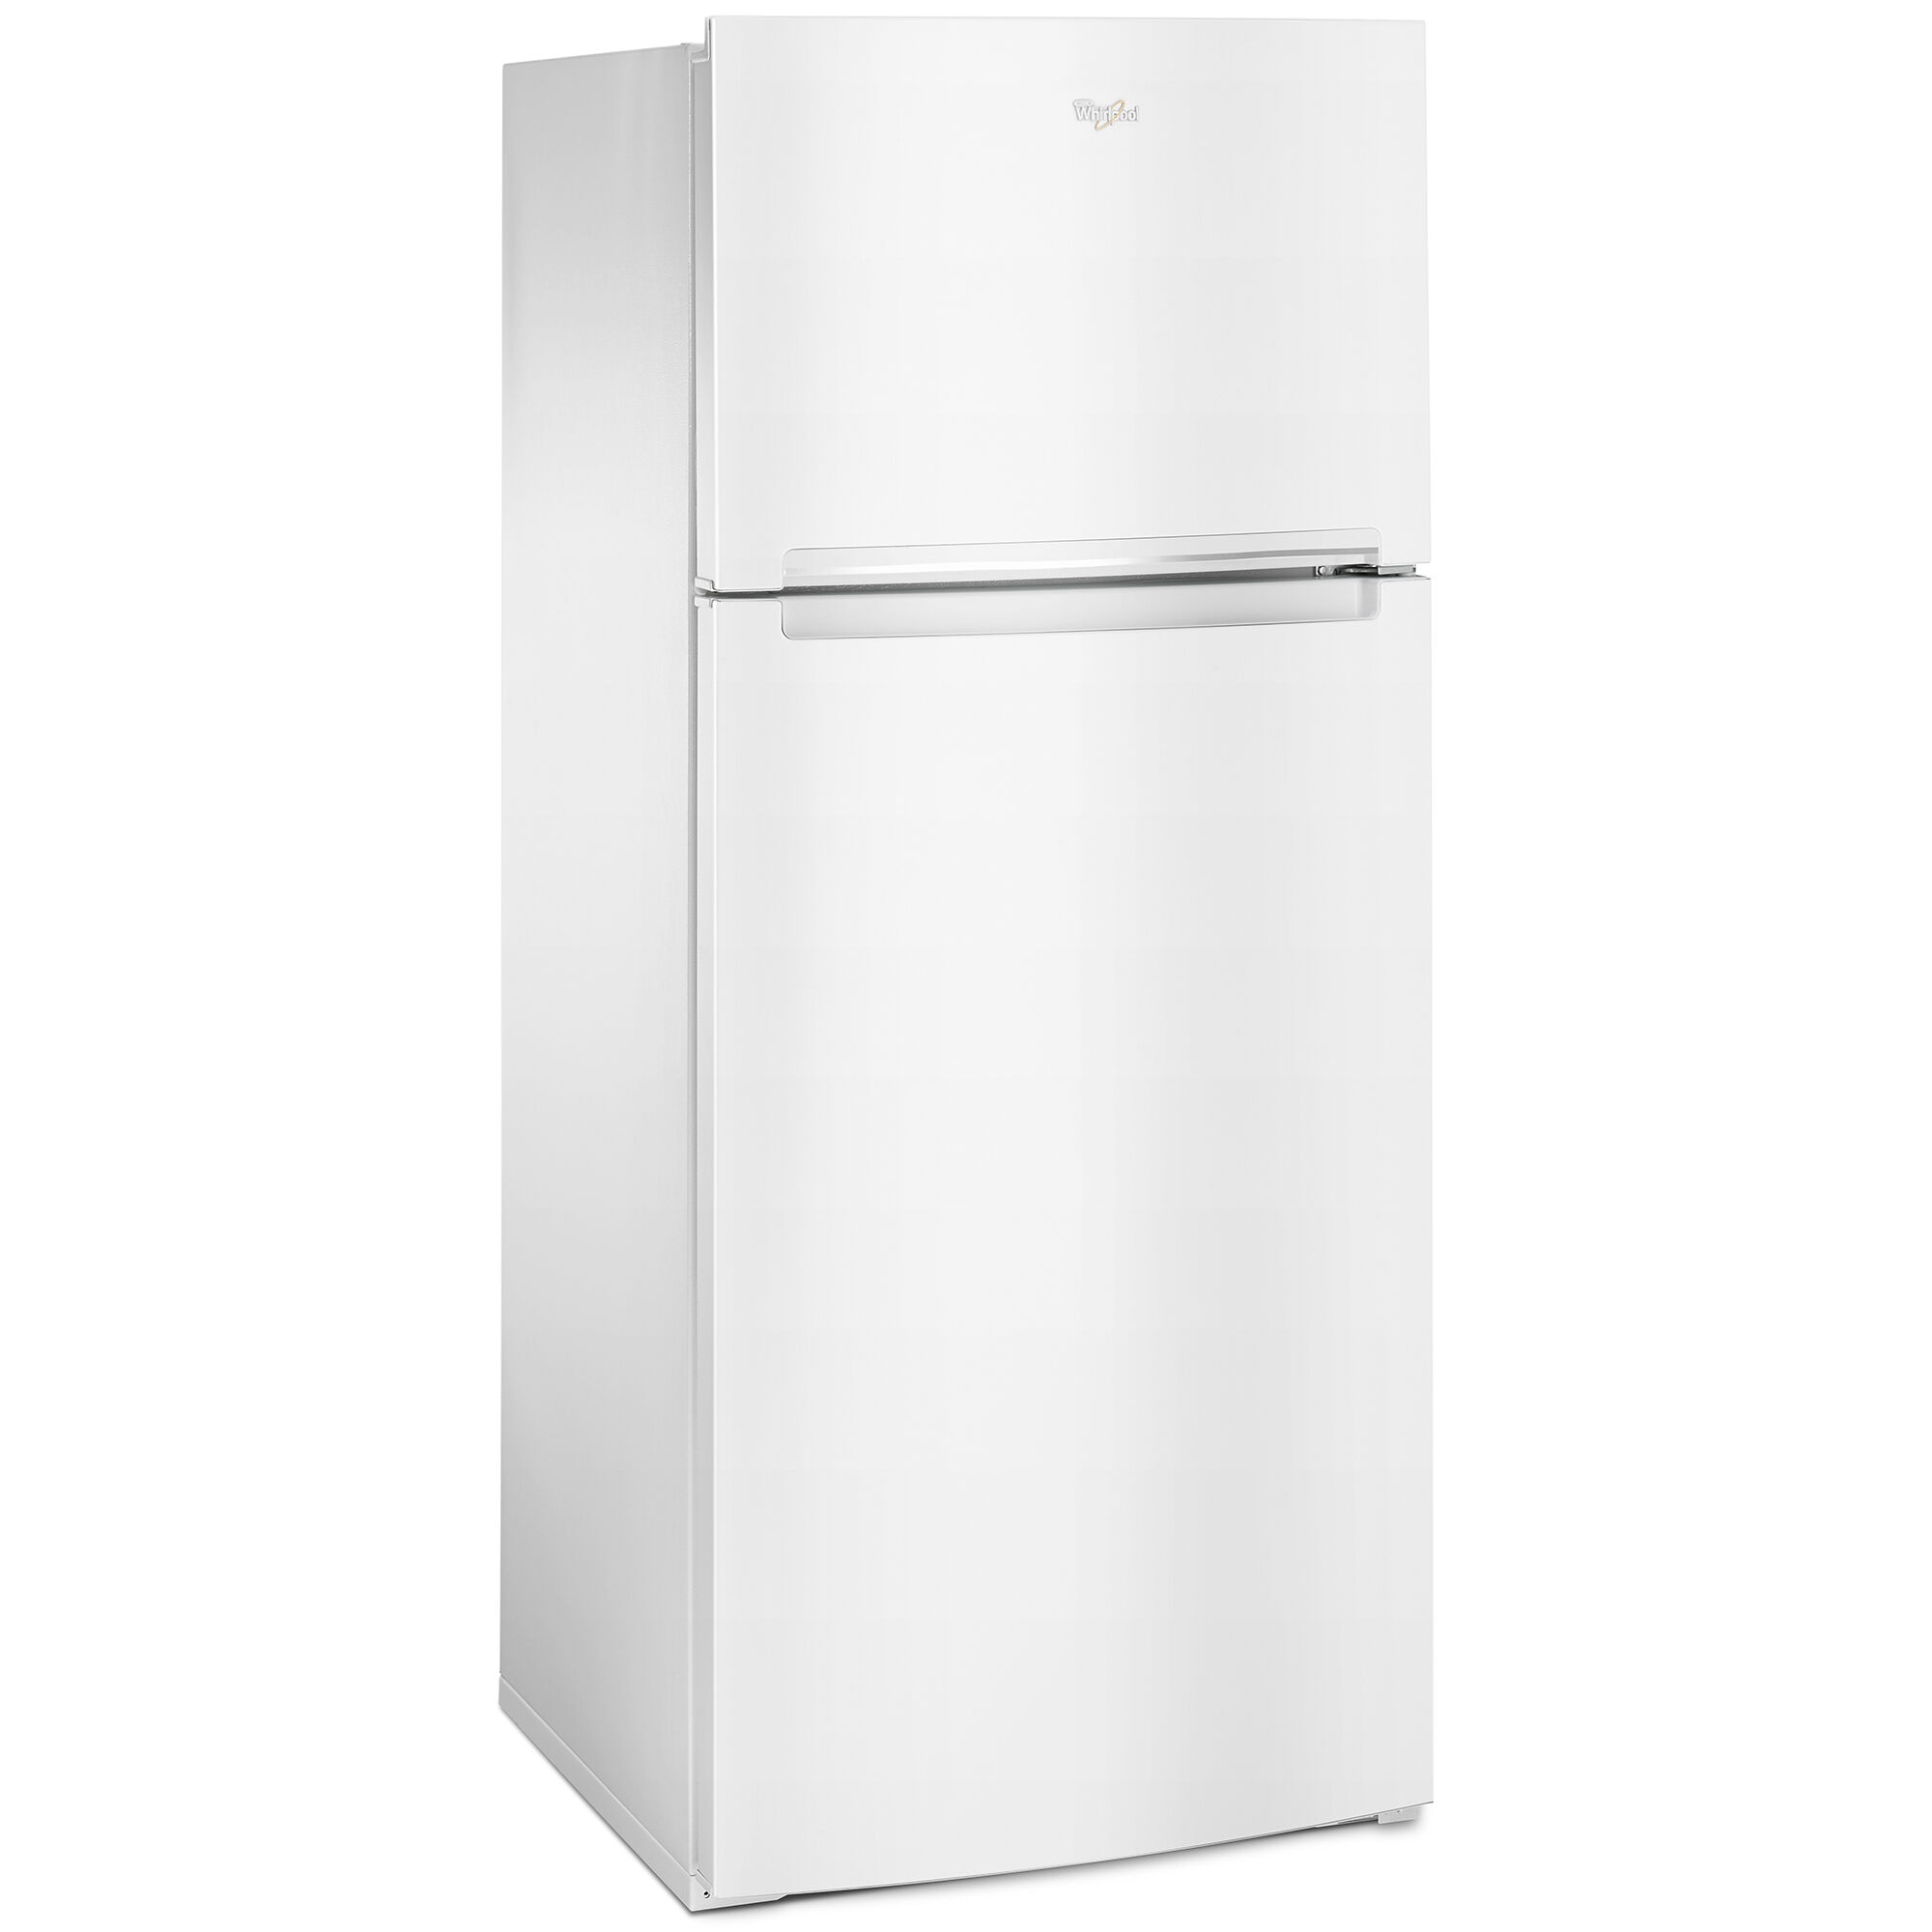 Whirlpool 28 in. 18.0 cu. ft. Top Freezer Refrigerator - White 